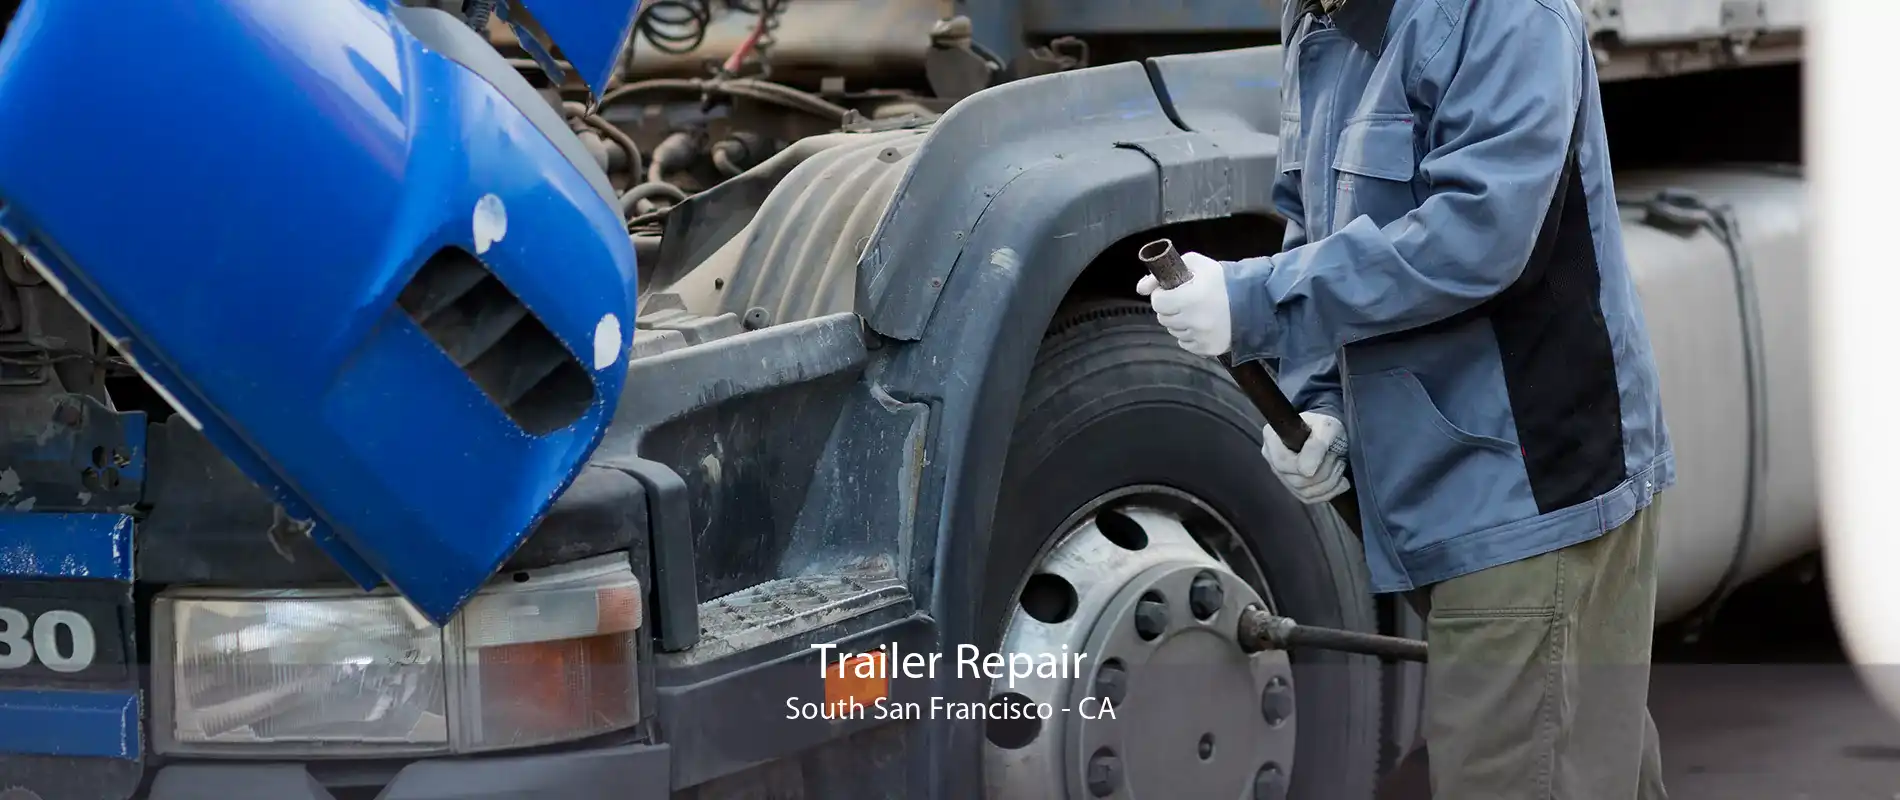 Trailer Repair South San Francisco - CA